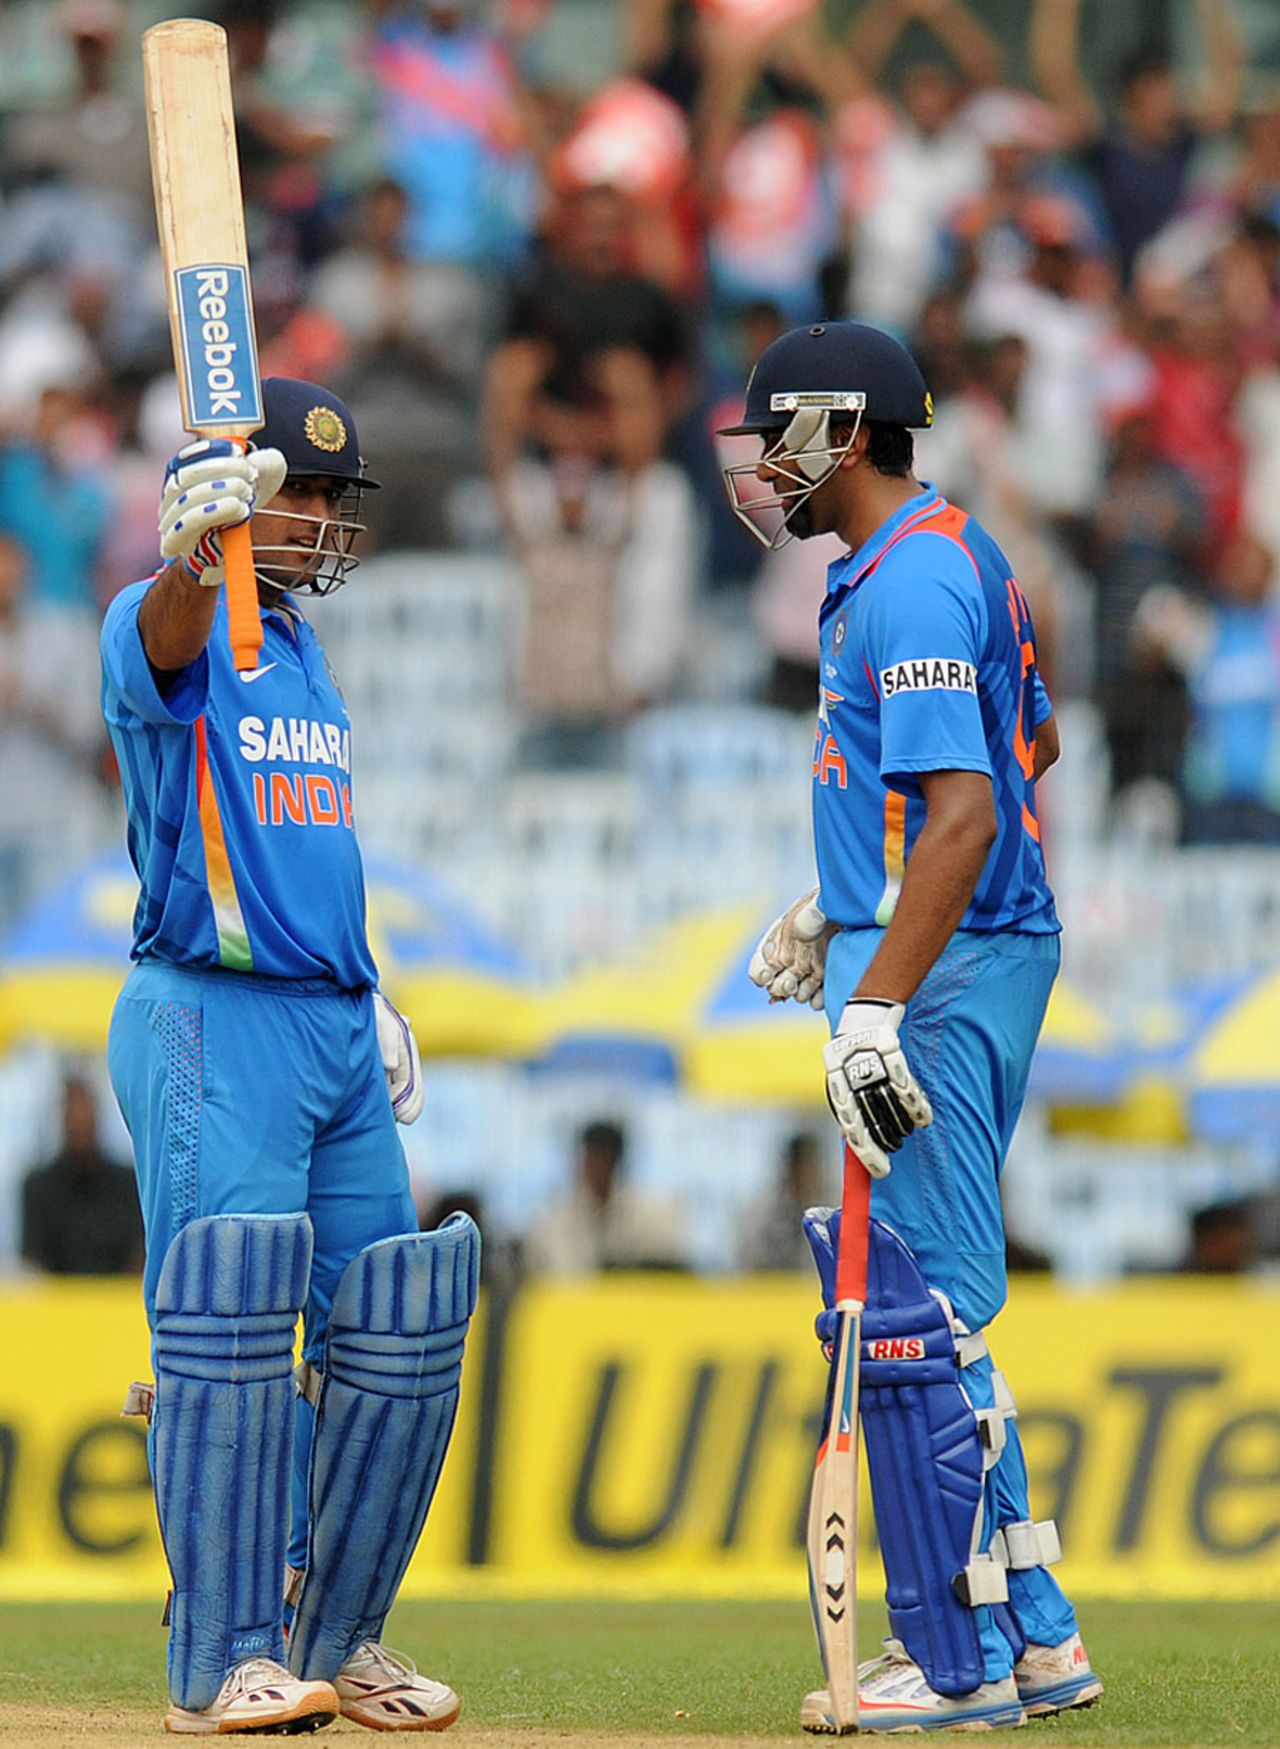 MS Dhoni raises his bat after scoring a century, India v Pakistan, 1st ODI, Chennai, December 30, 2012